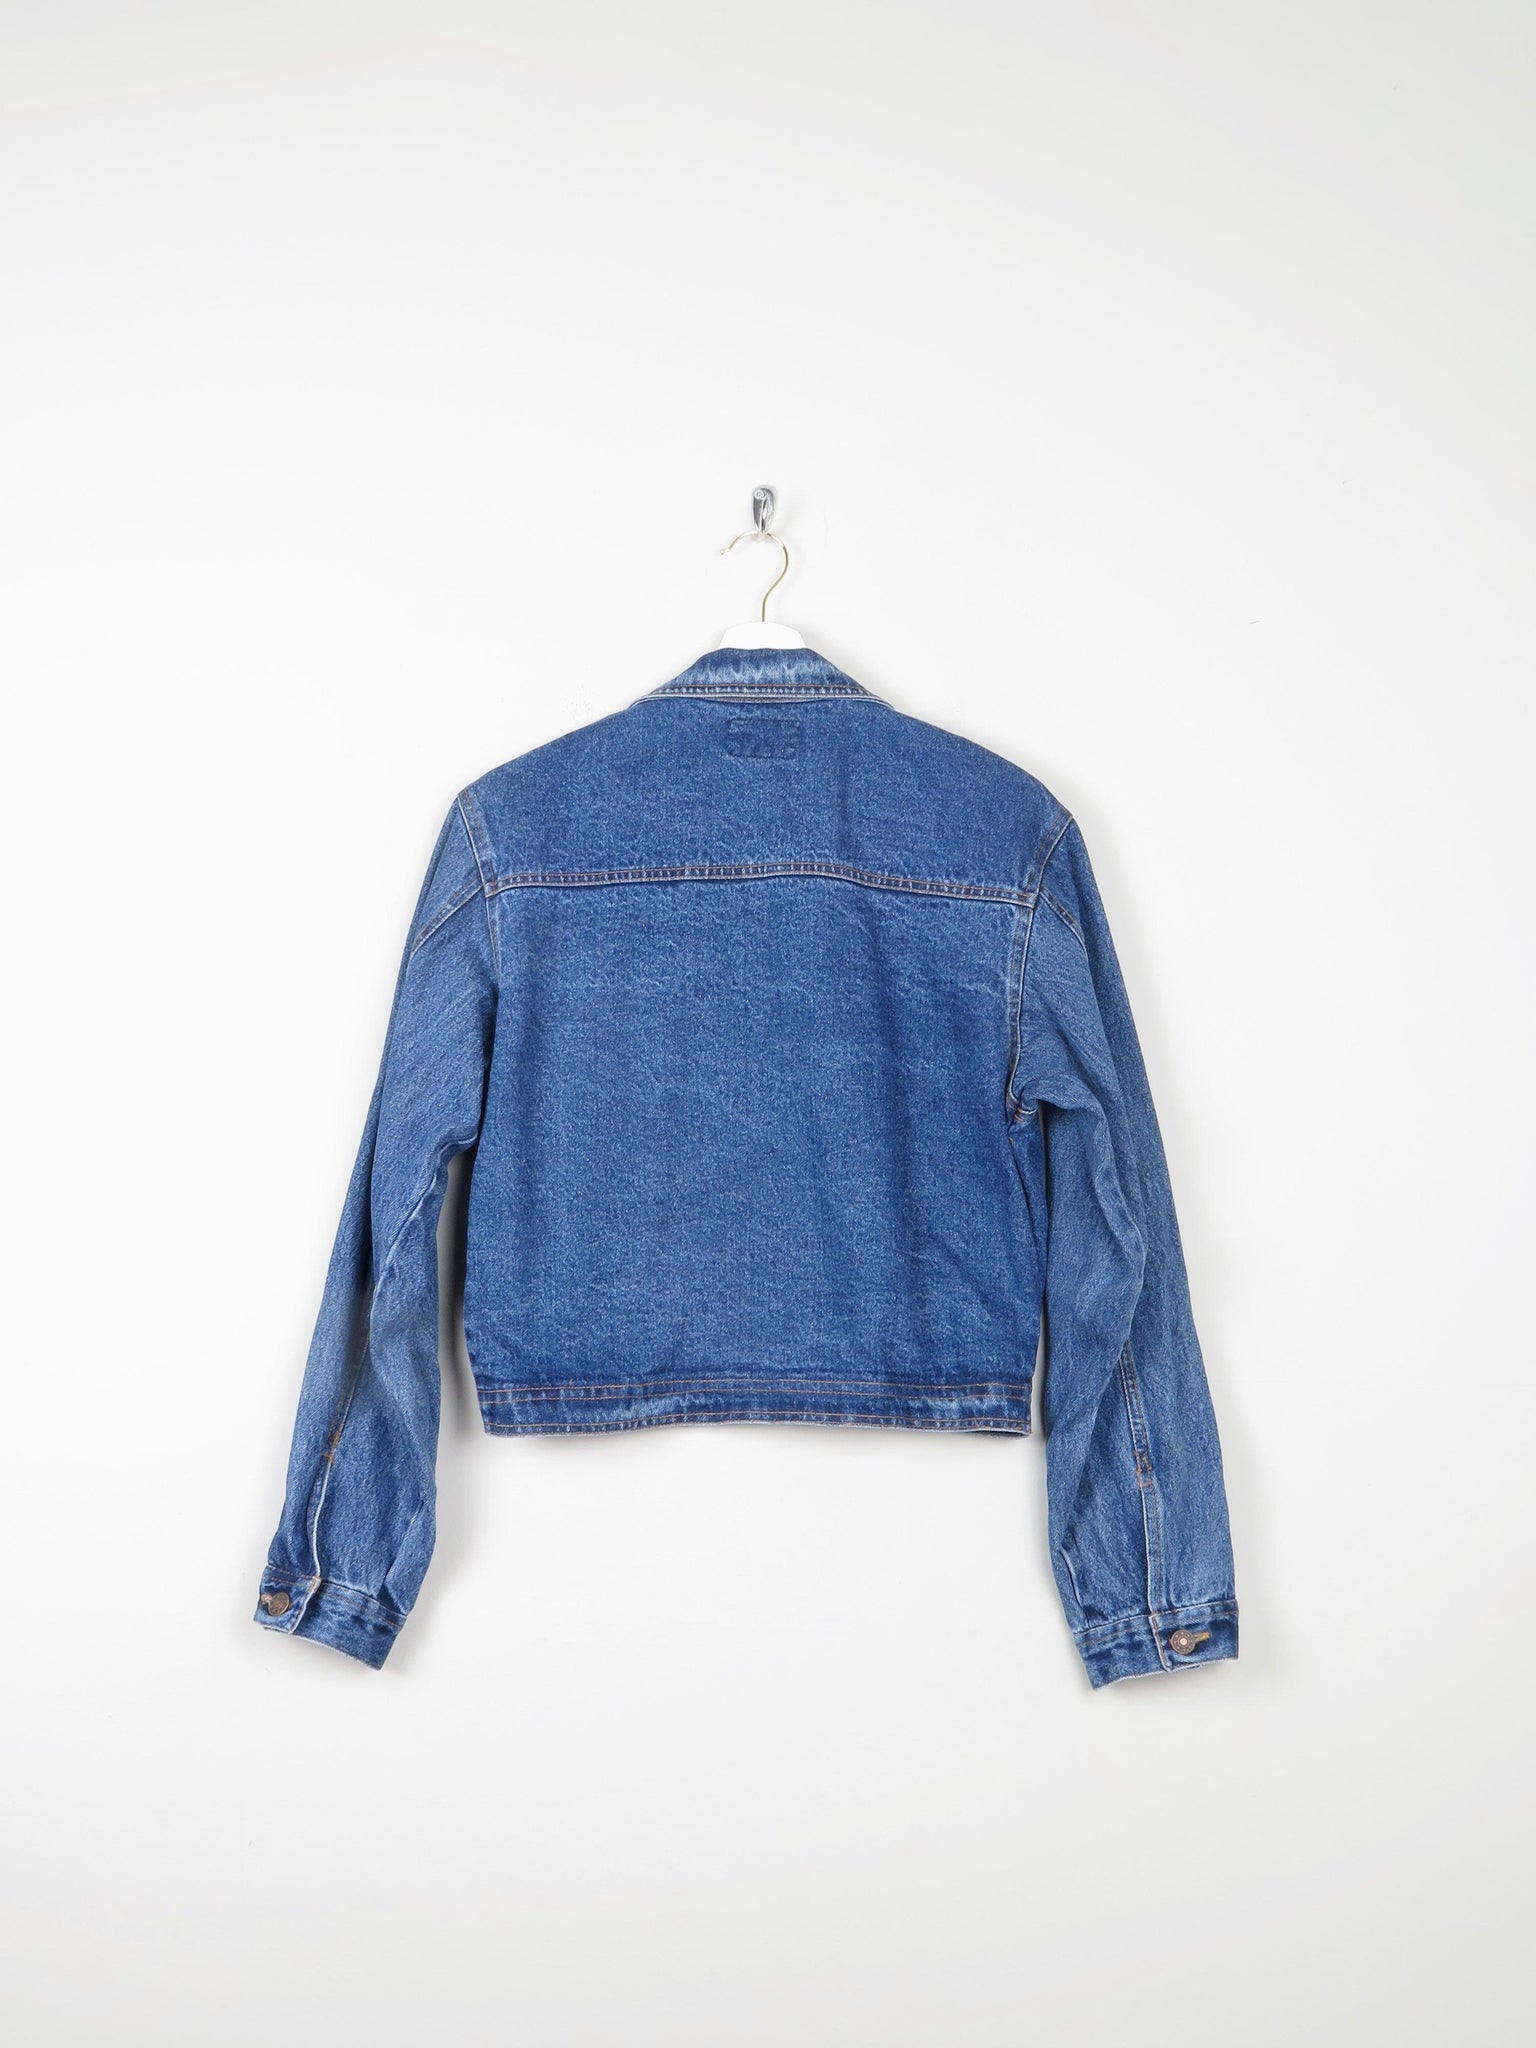 Women's Indigo Blue Vintage Fitted Cropped Denim Jacket S/M - The Harlequin